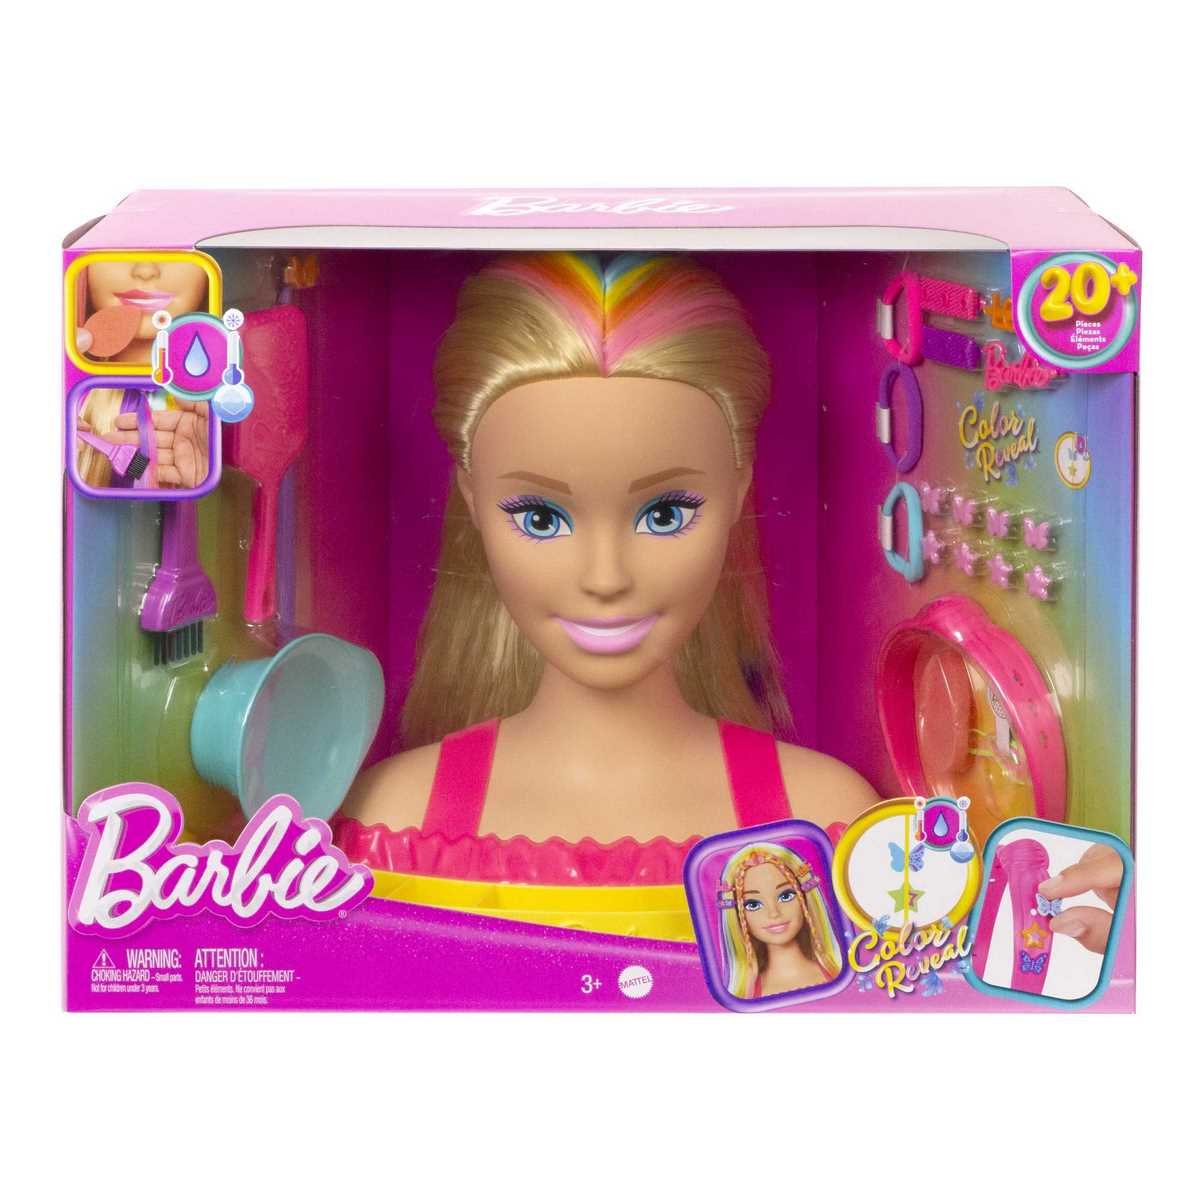 Barbie totally hair ultra chevelure blonde - Mattel Games